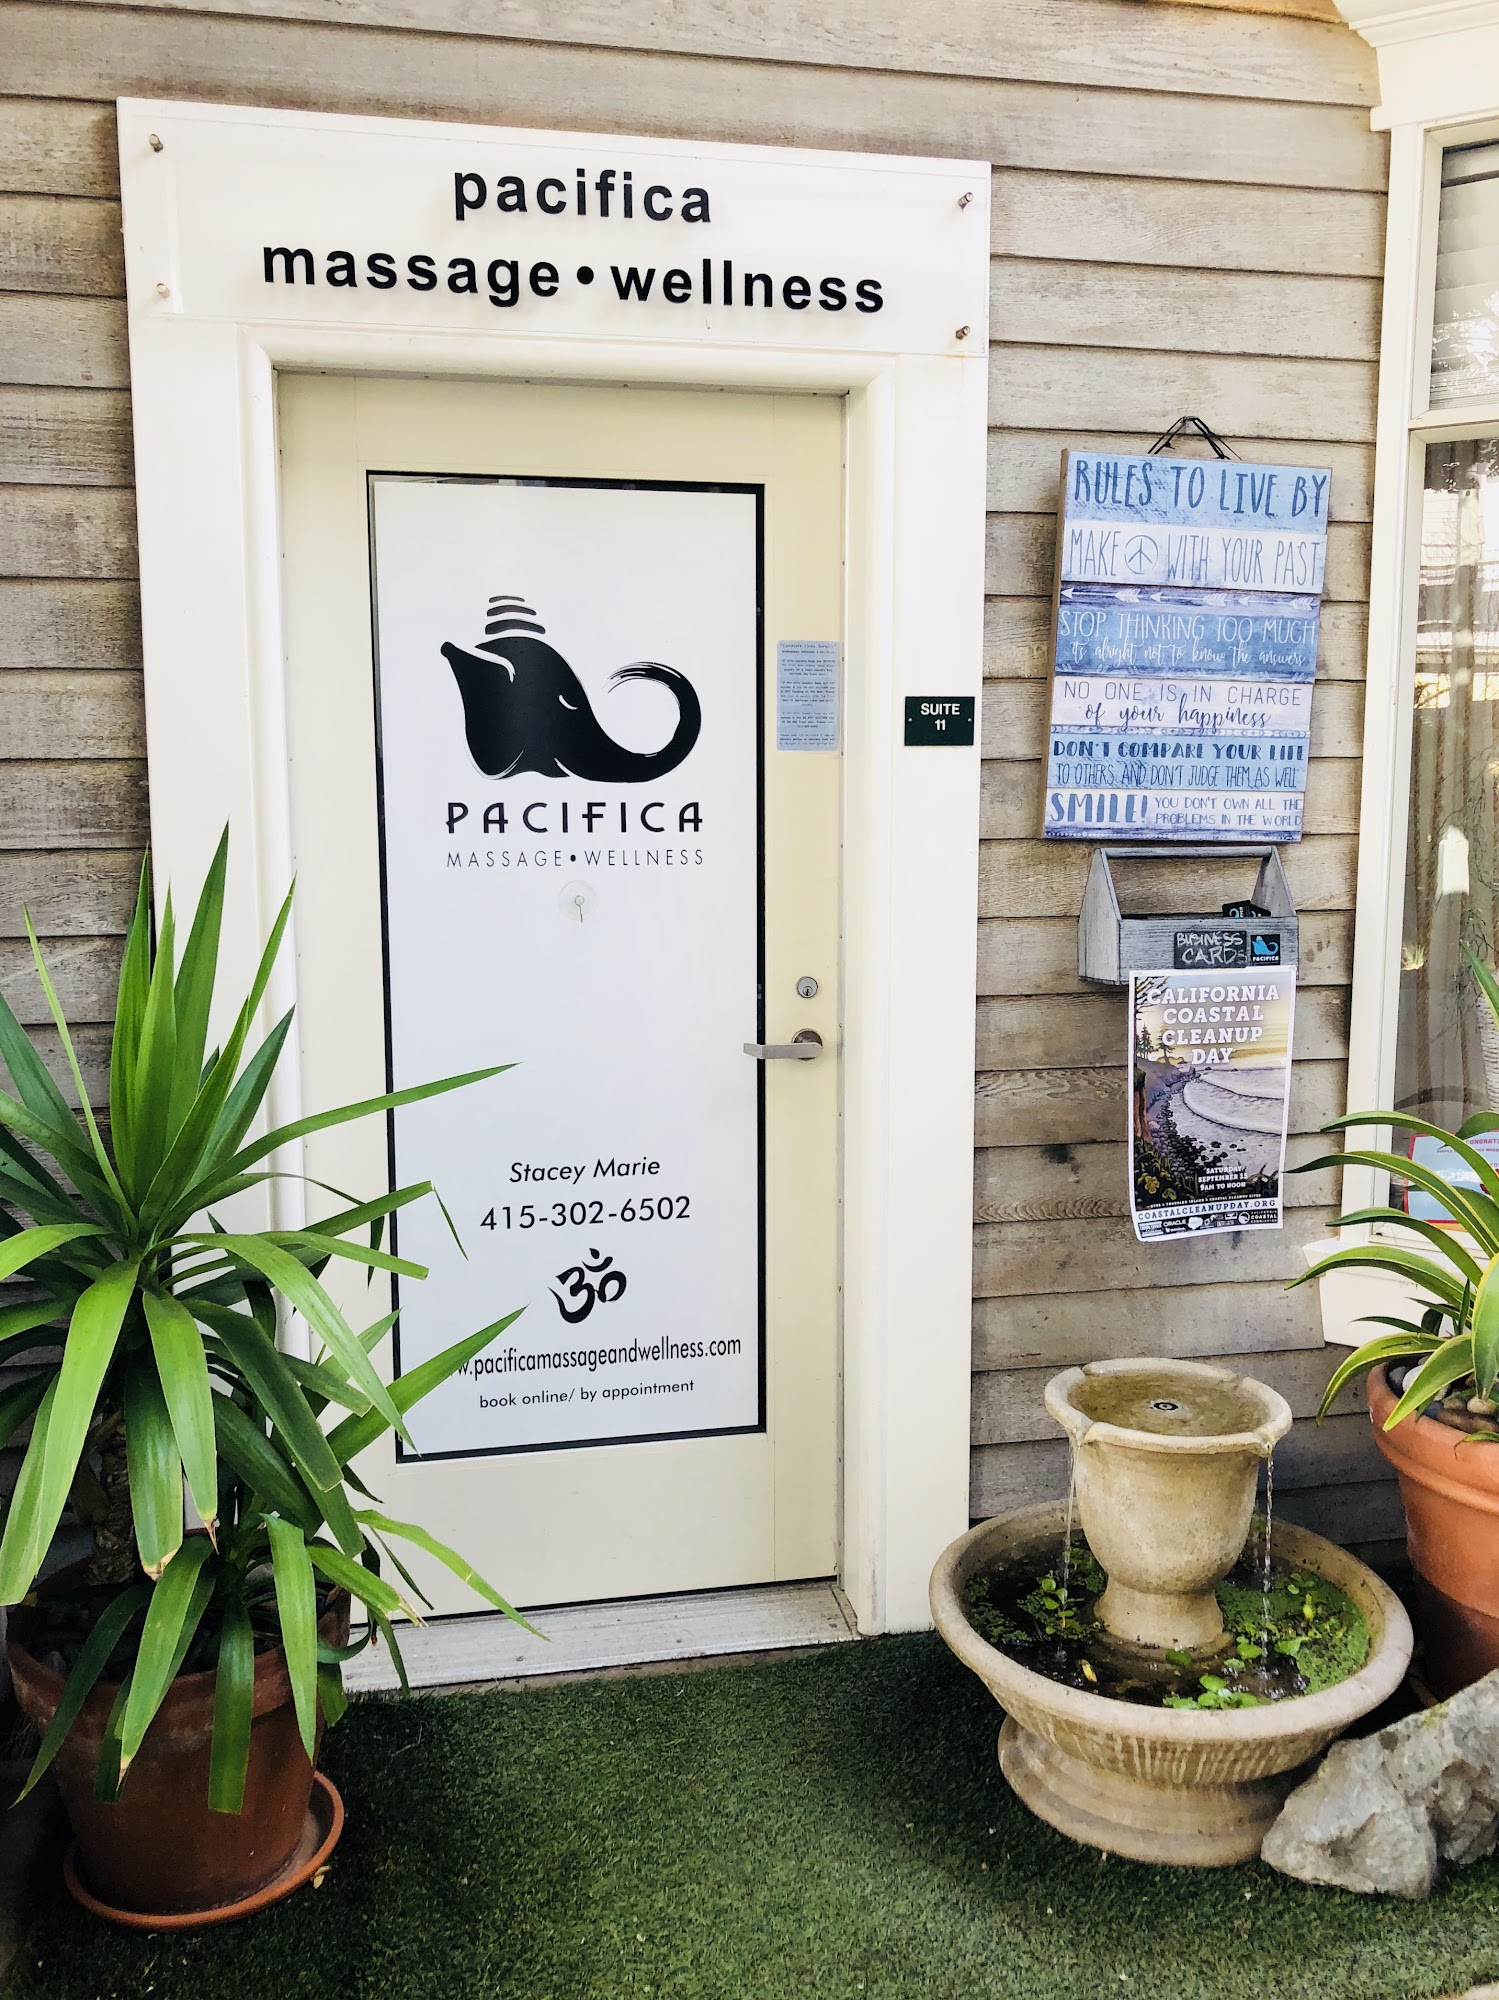 Pacifica Massage and Wellness